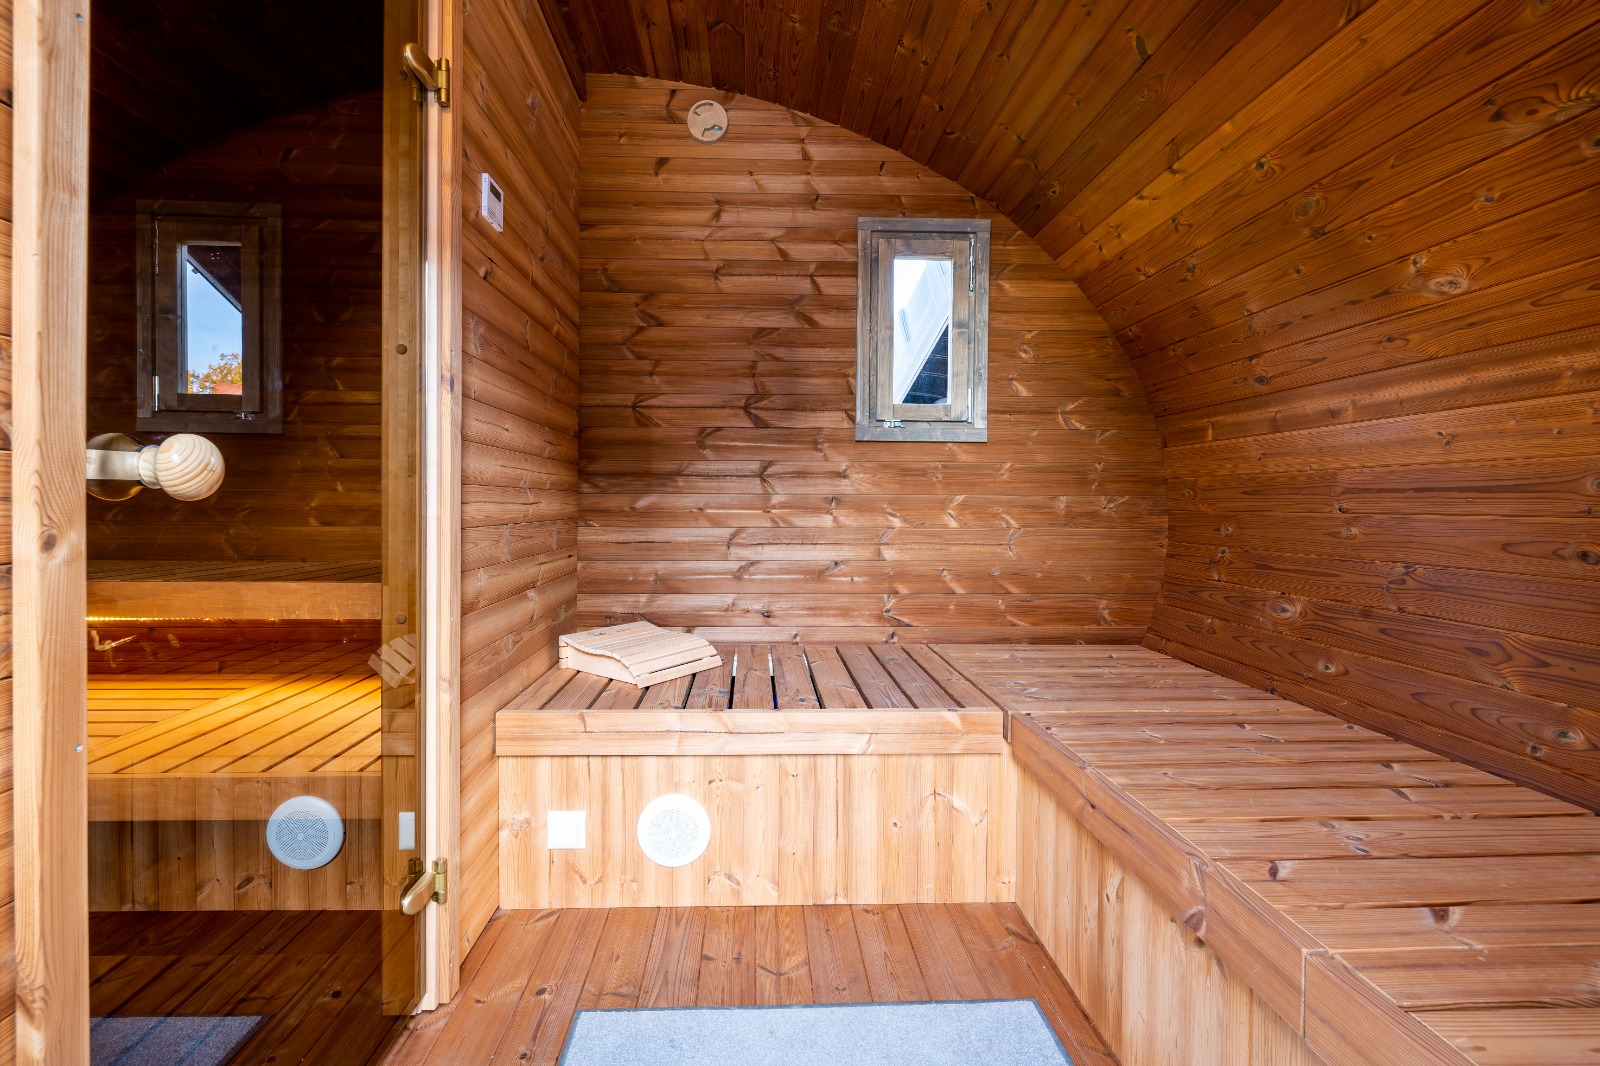 How to Sauna Like a Pro - Neptune Saunas & Hot Tubs